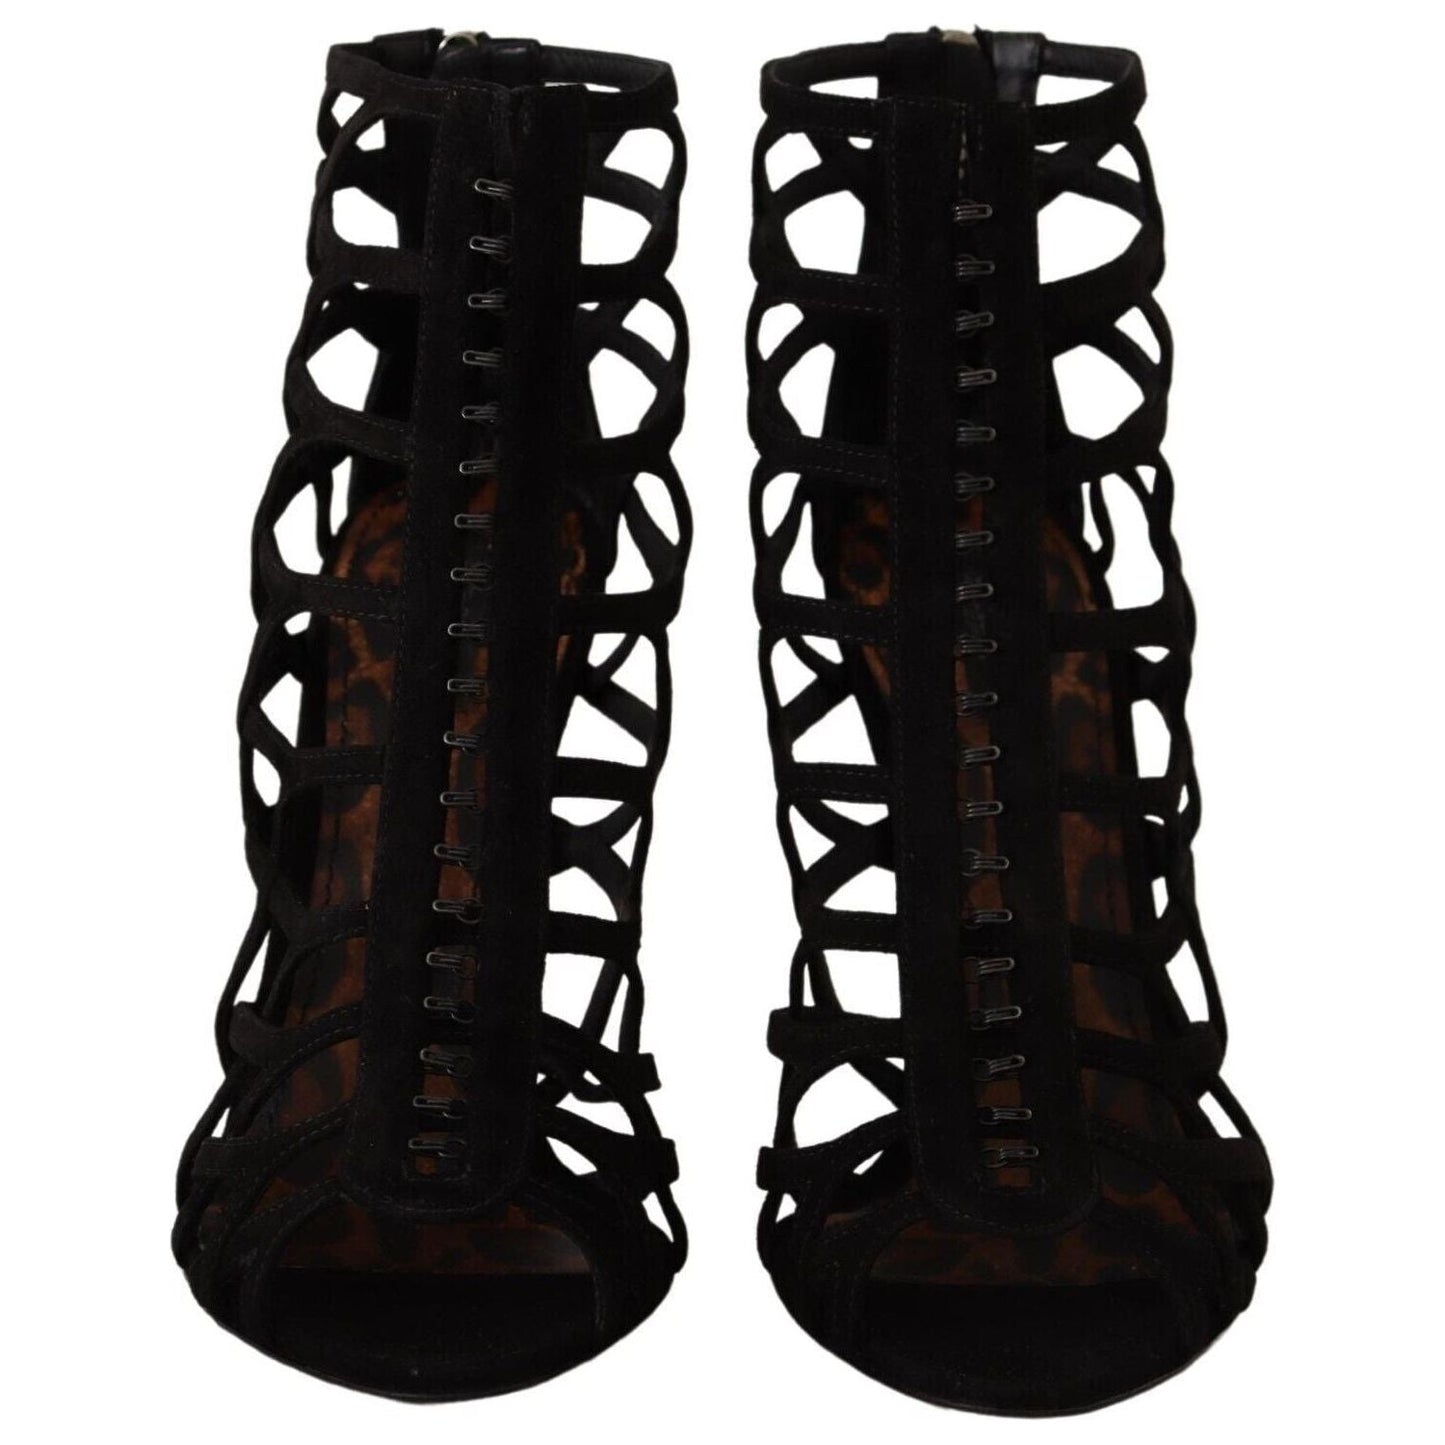 Dolce & Gabbana Elegant Black Suede Heels Sandals black-suede-stiletto-heels-bette-sandals-shoes